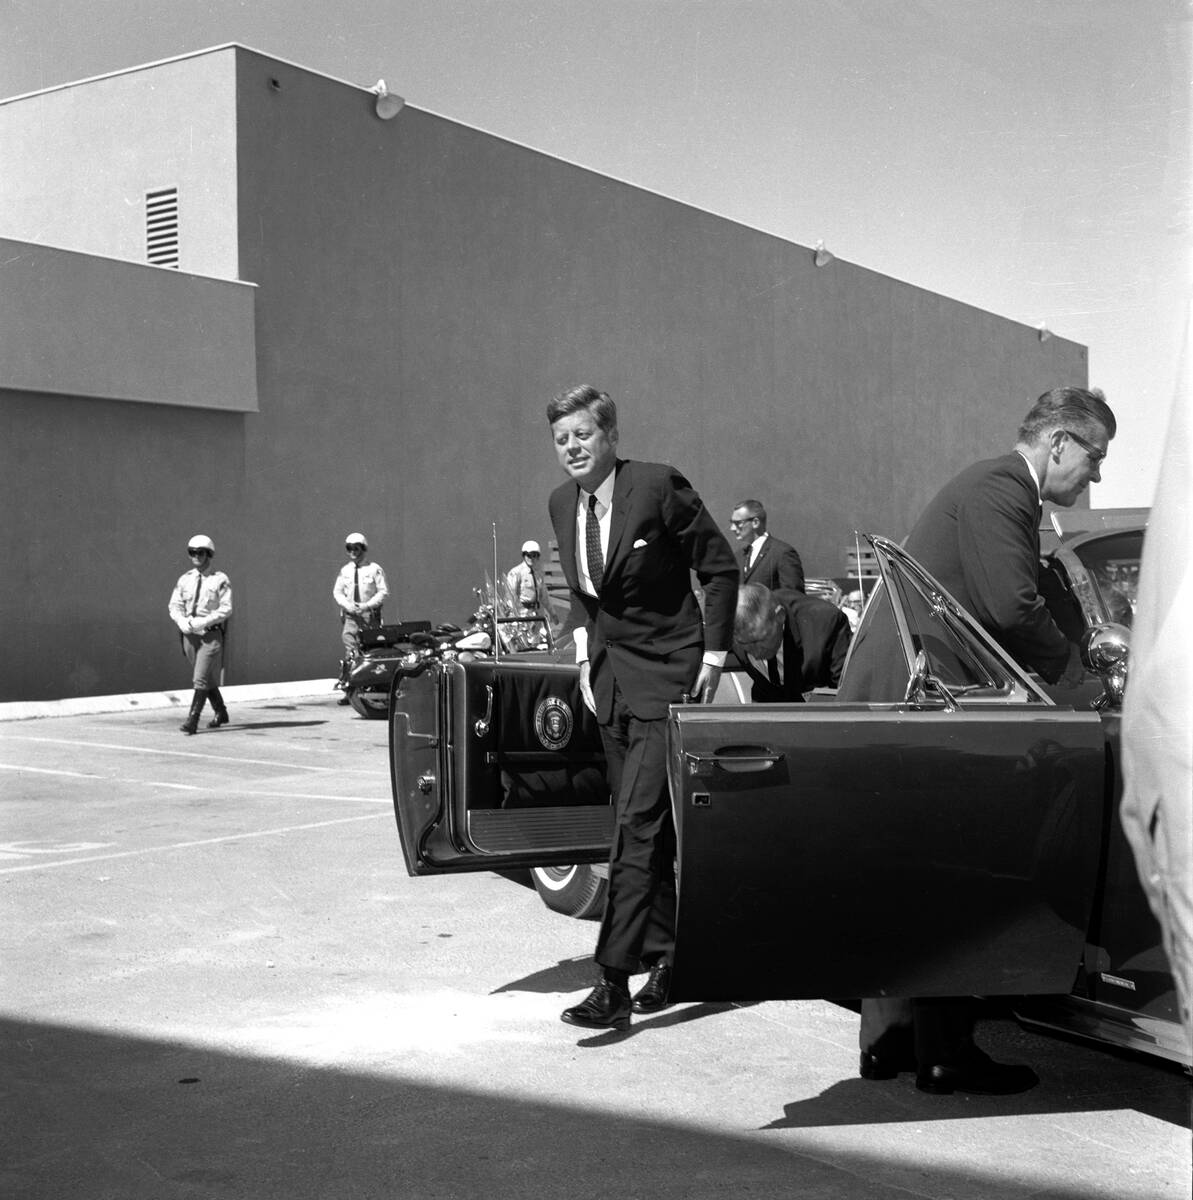 President John F. Kennedy speaks at the Las Vegas Convention Center in Las Vegas, Nevada, on Se ...